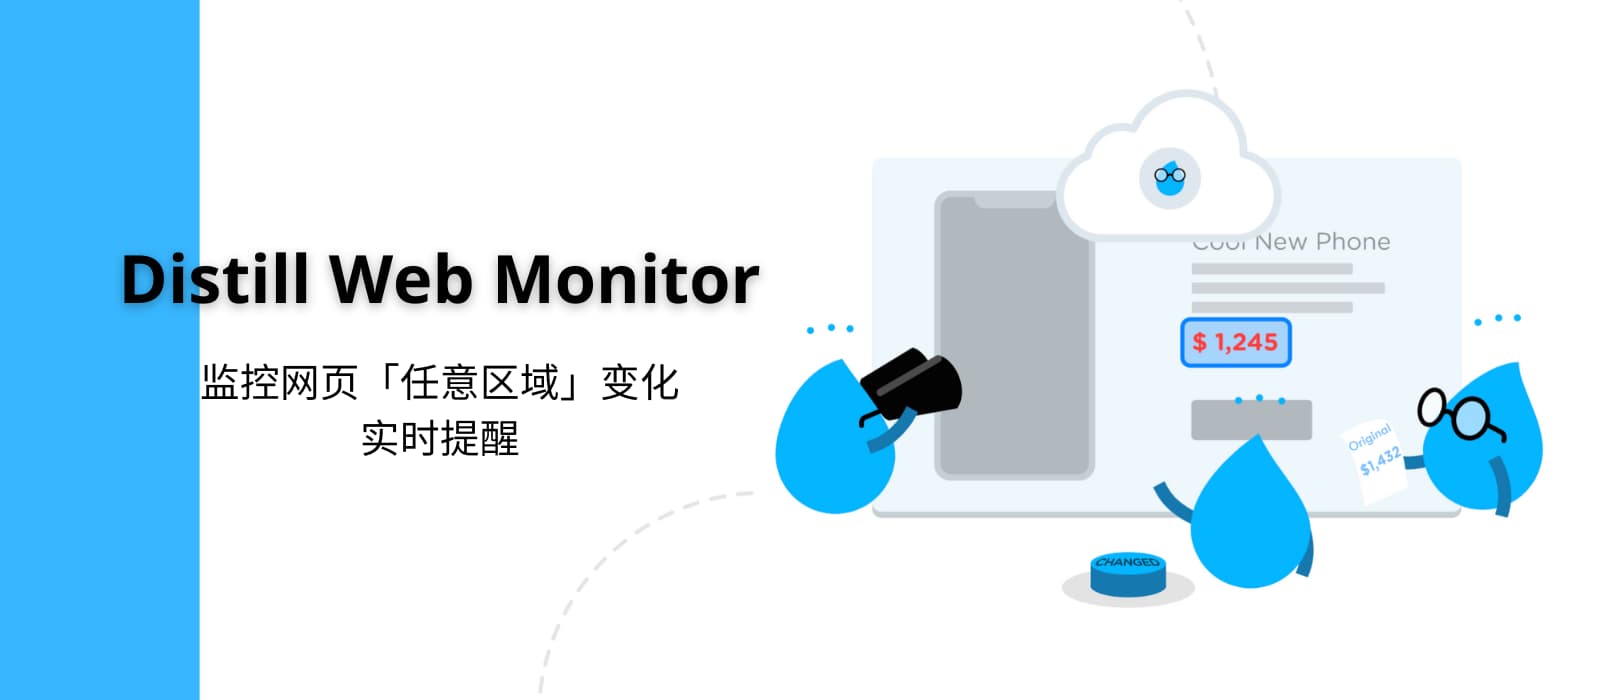 Distill Web Monitor - 监控网页「任意区域」变化，实时提醒